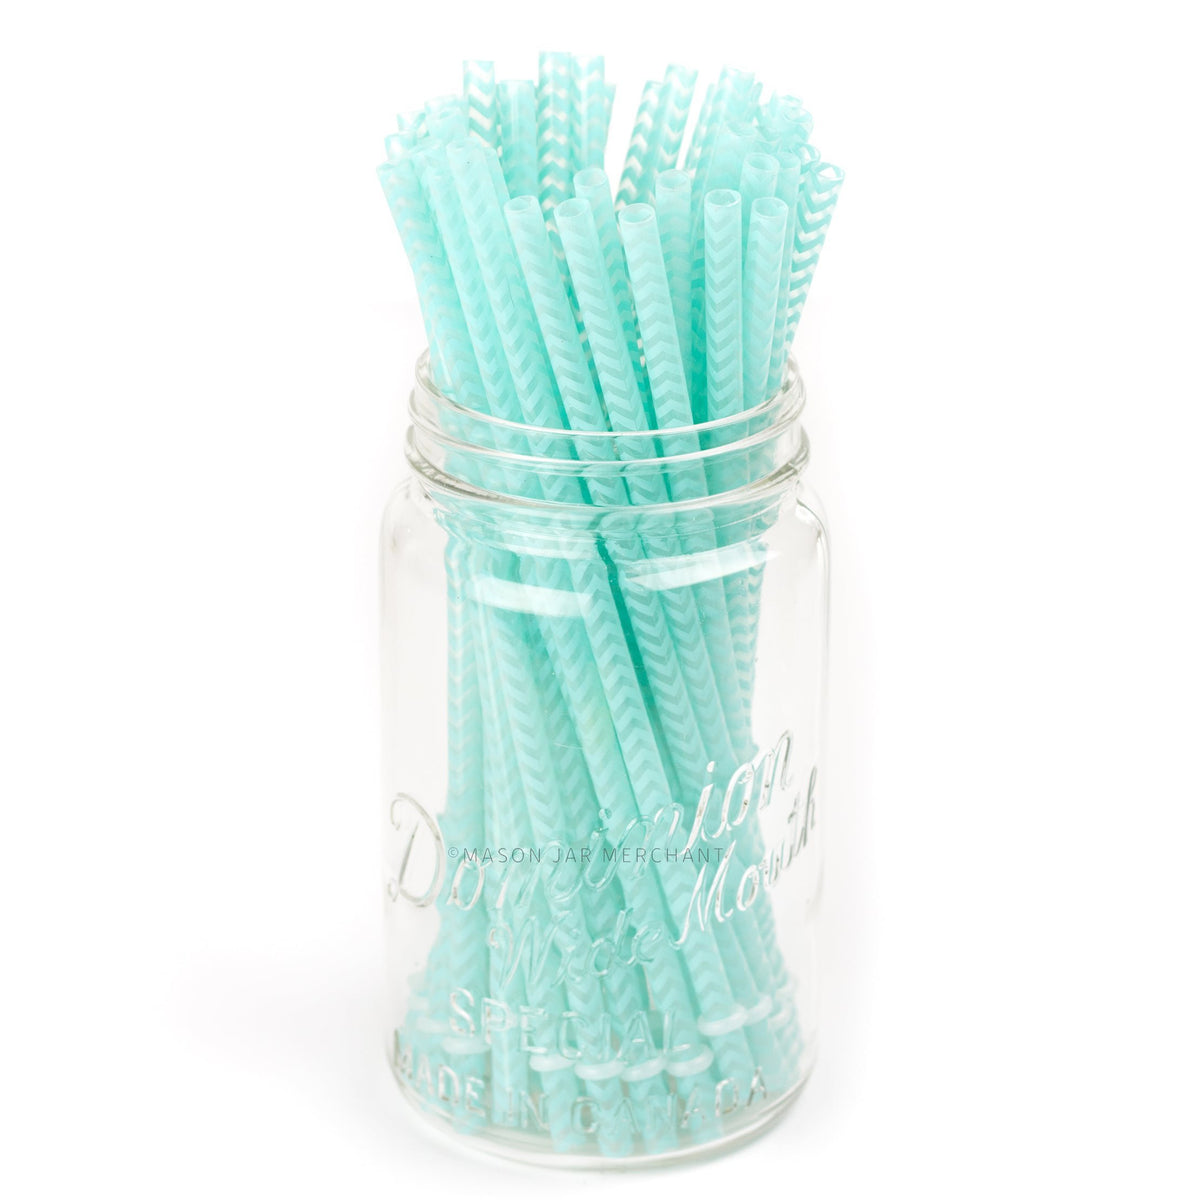 Aqua chevron patterned BPA-free reusable plastic straws in a mason jar, against a white background 